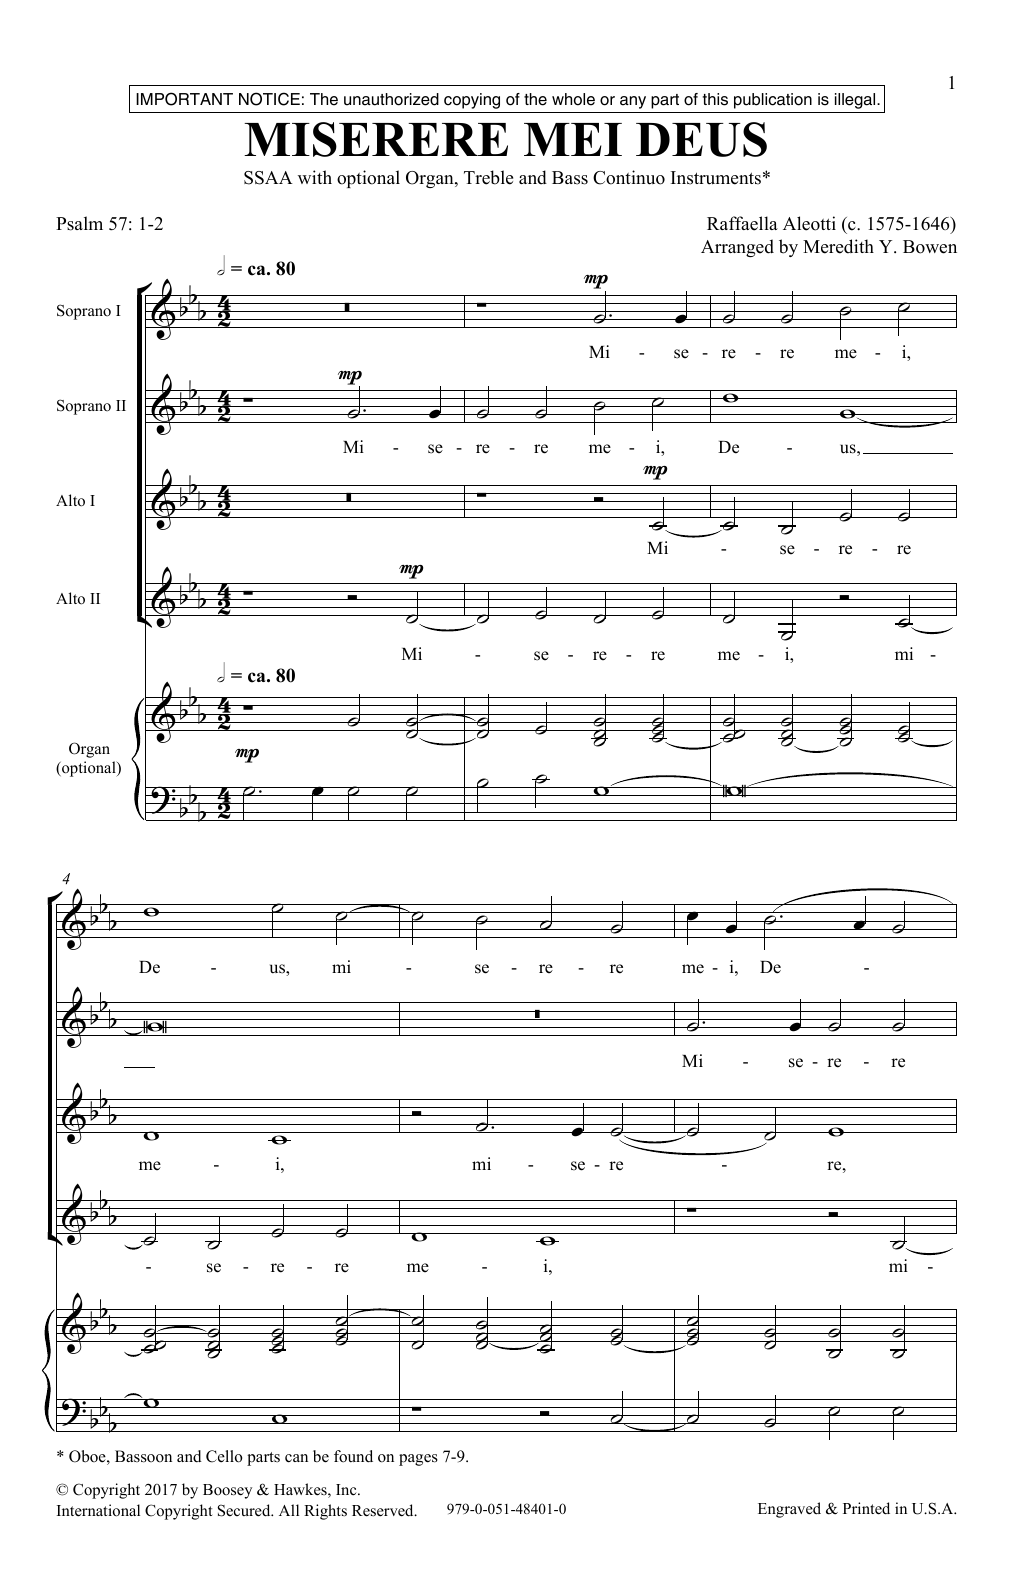 Meredith Bowen Miserere Mei Deus Sheet Music Notes & Chords for 2-Part Choir - Download or Print PDF